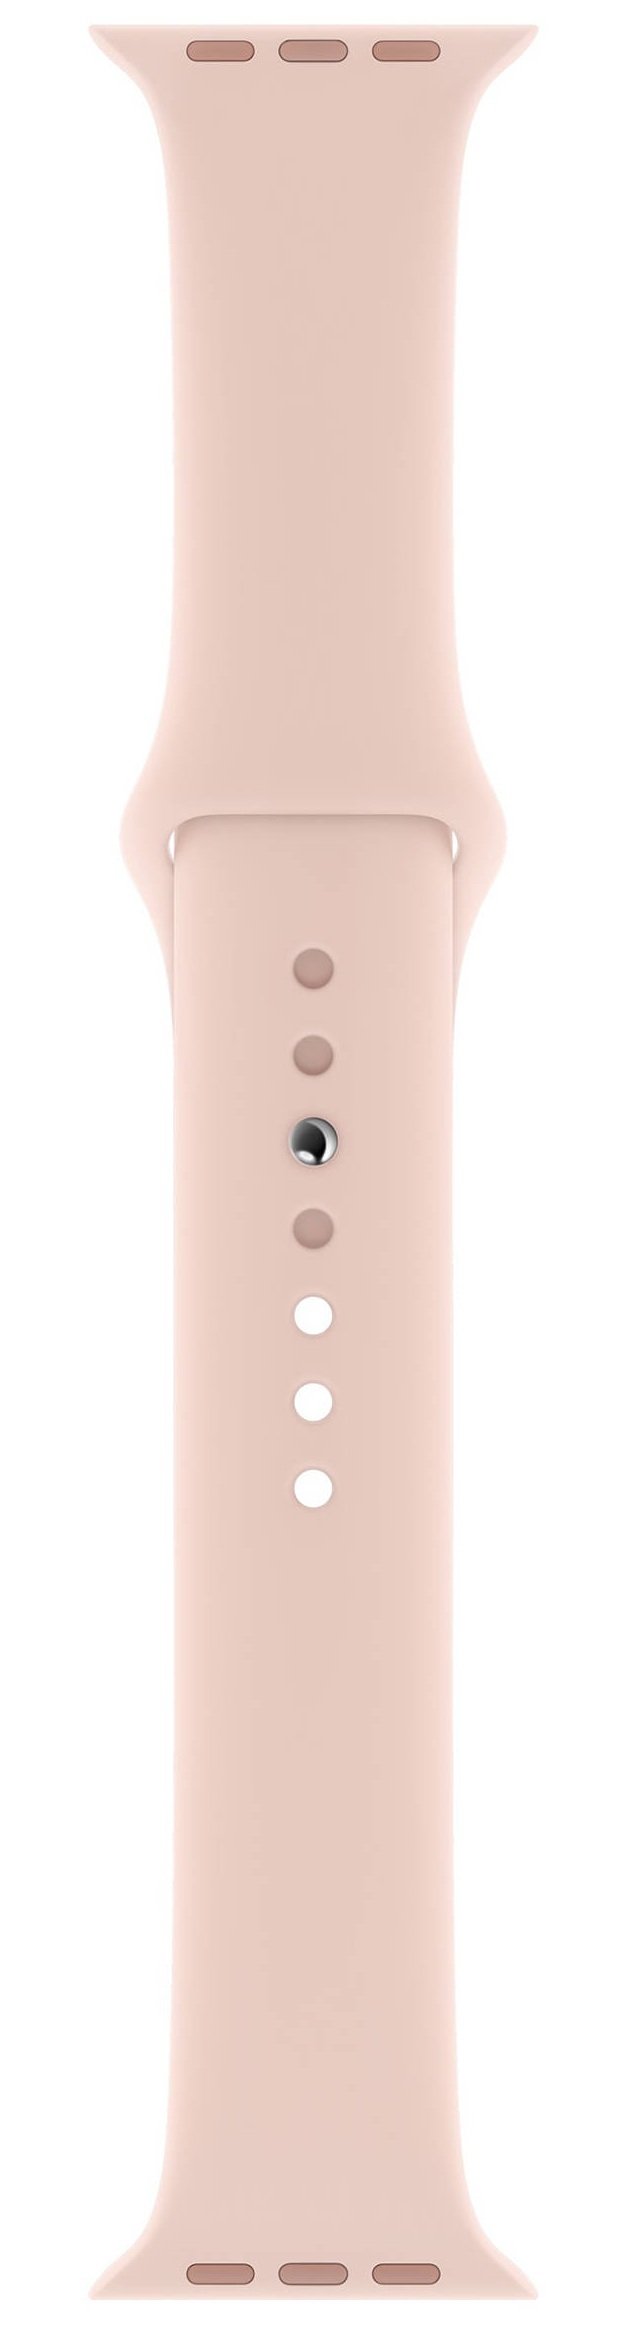 Смарт-часы Apple Watch Series 5 GPS 44mm Gold Aluminium Case with Pink Sand Sport Band S/M & M/L фото 3